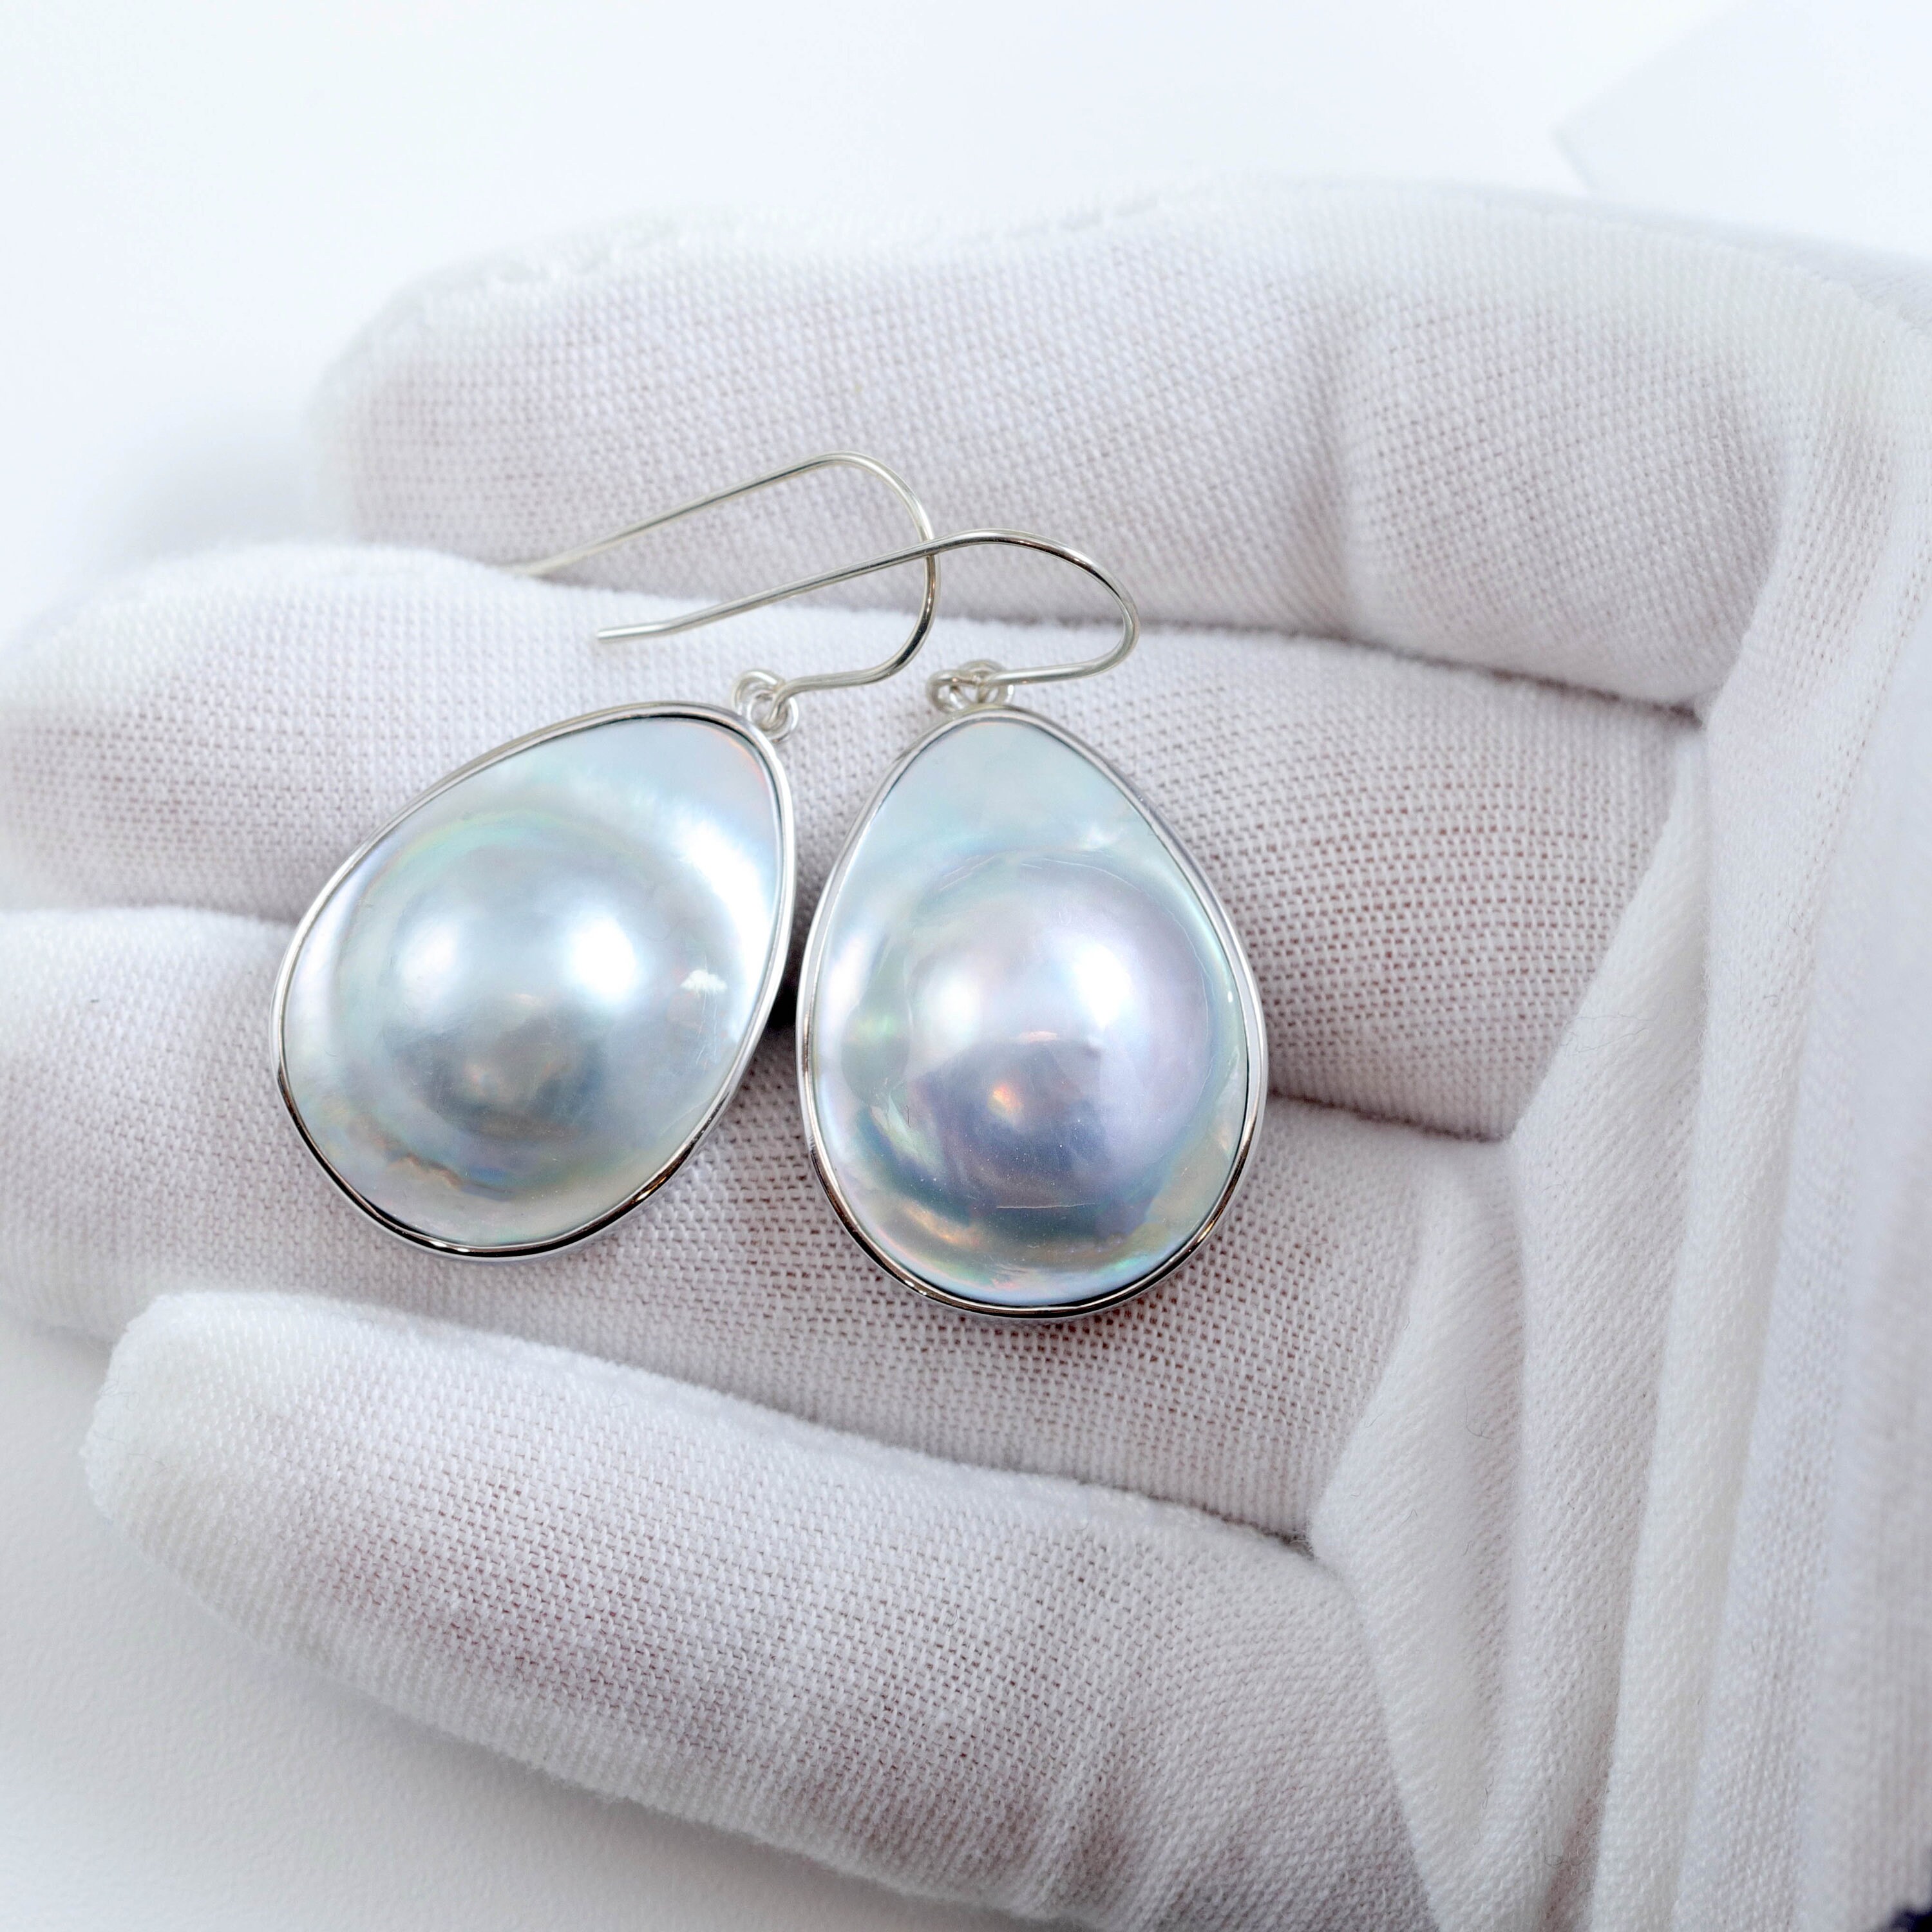 Blister Half Pearl Earrings Sterling Silver or 14k Solid | Etsy